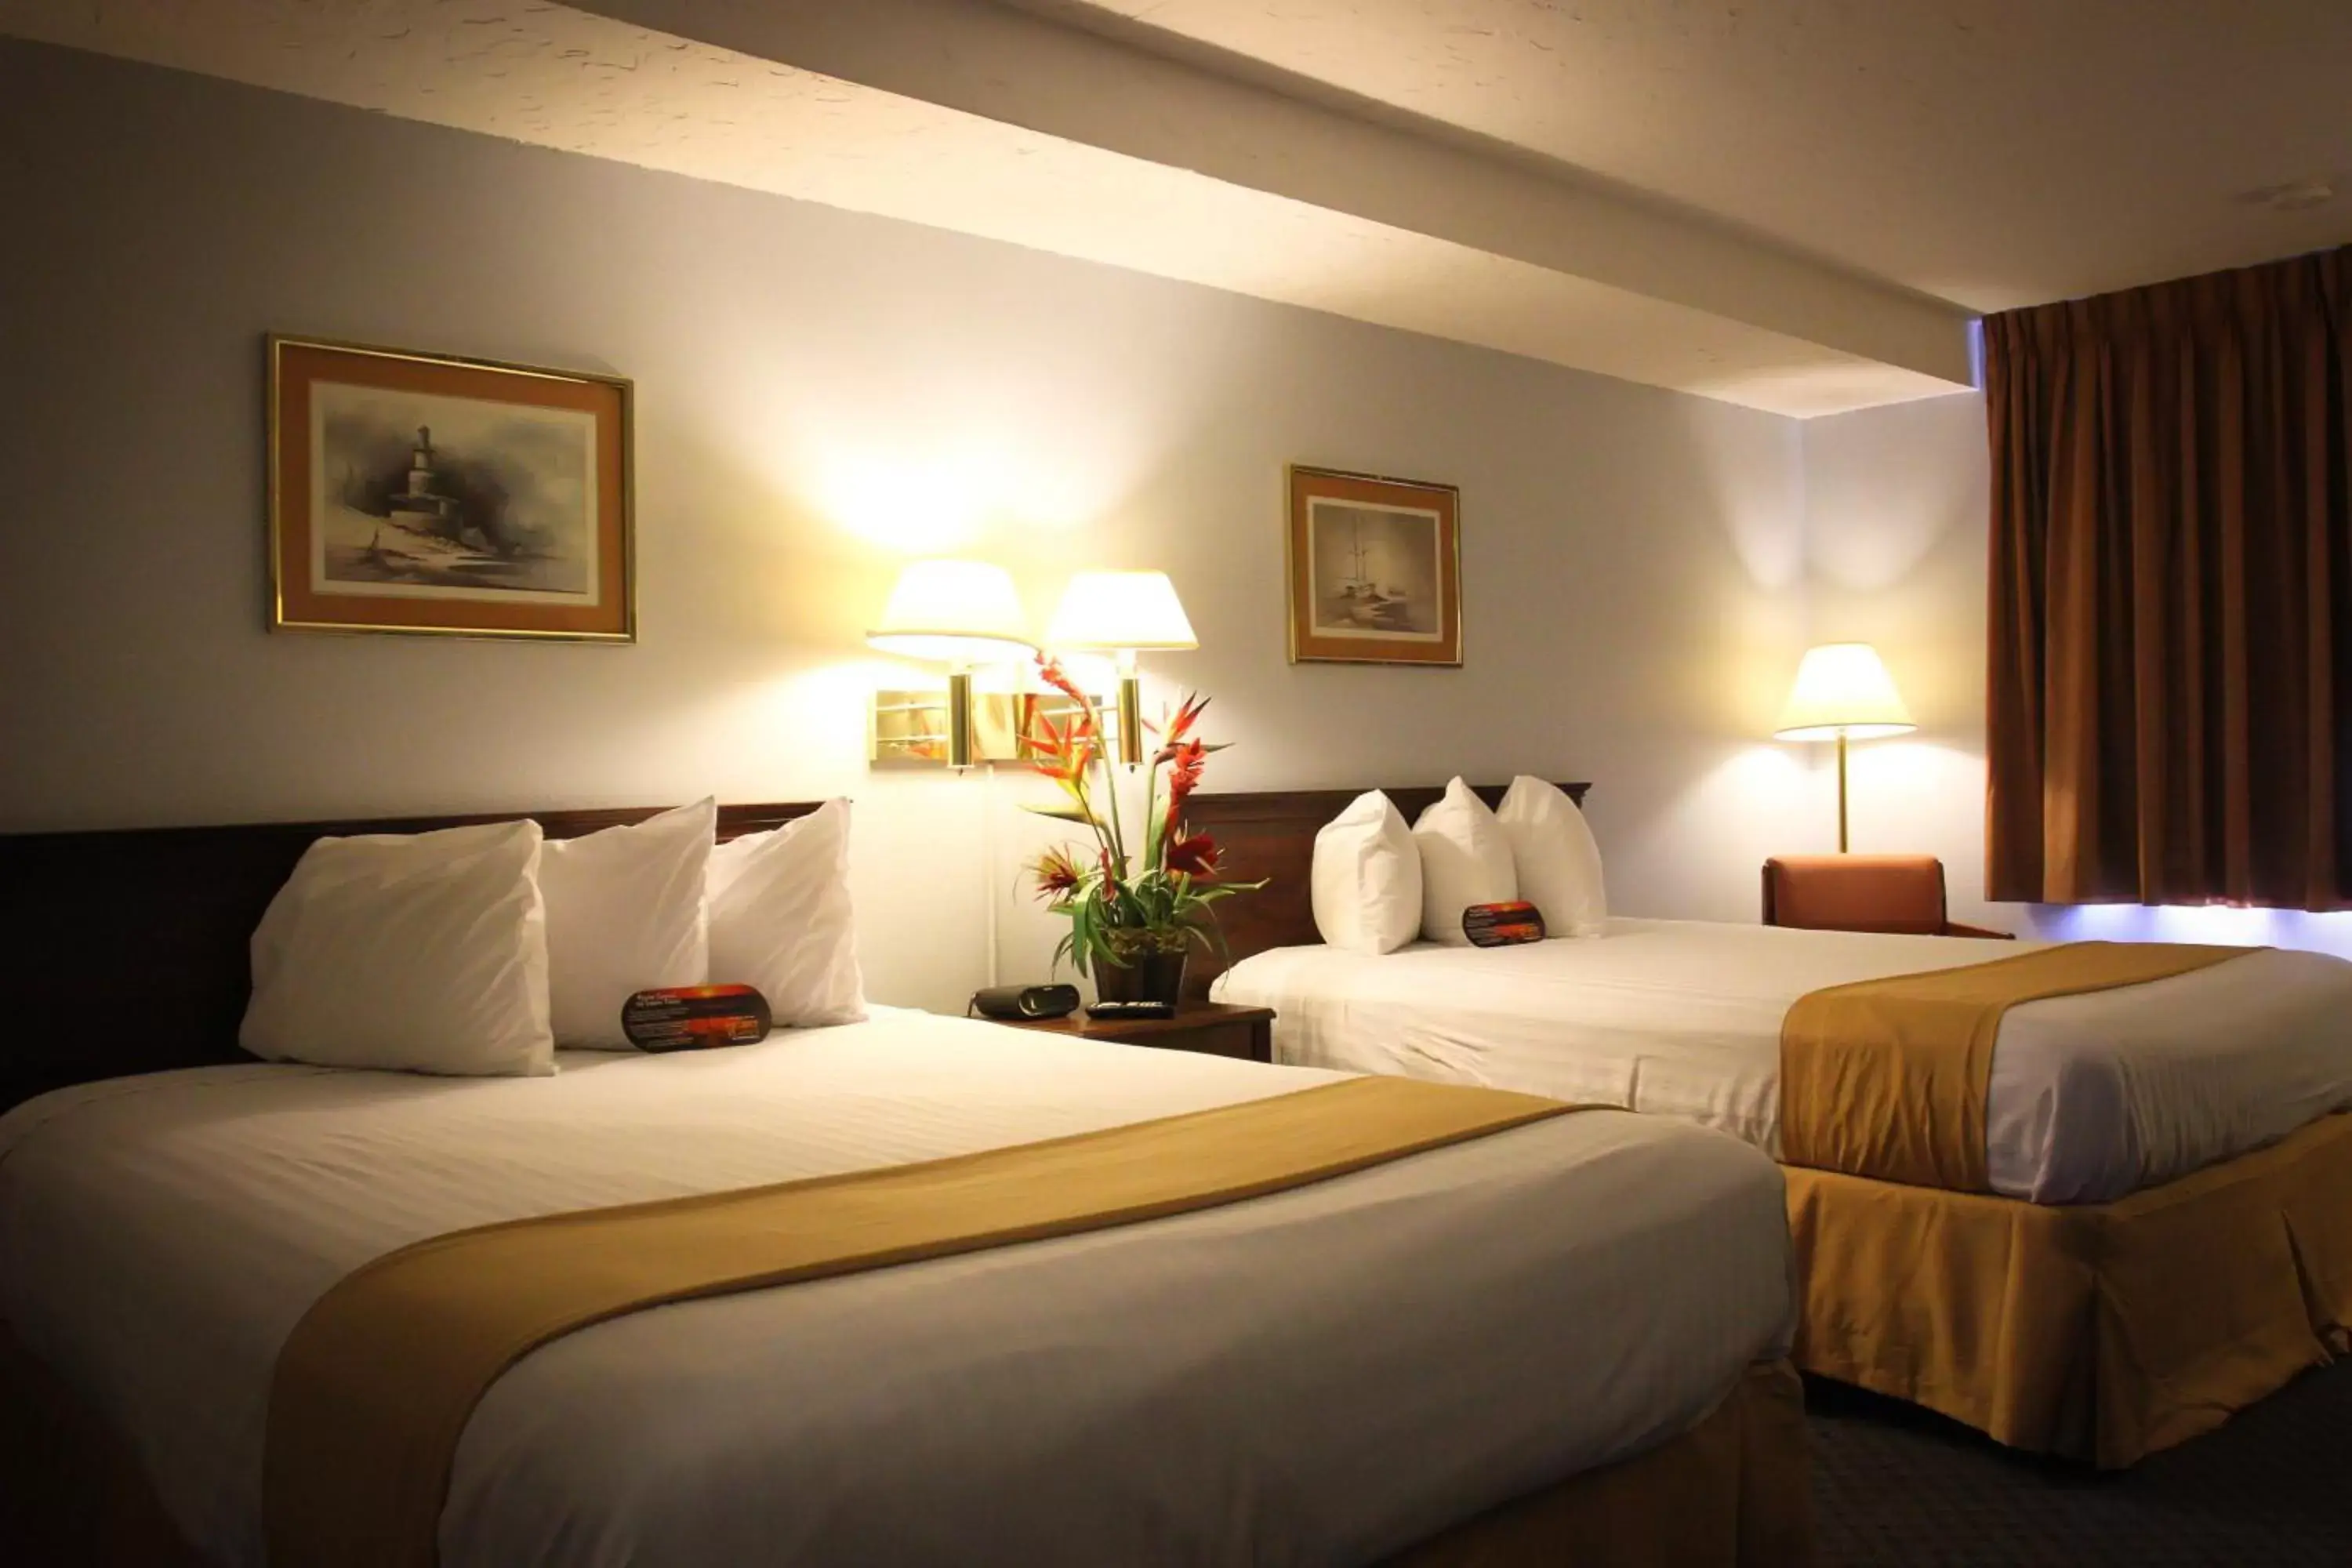 Queen Room with Two Queen Beds in Clover Island Inn